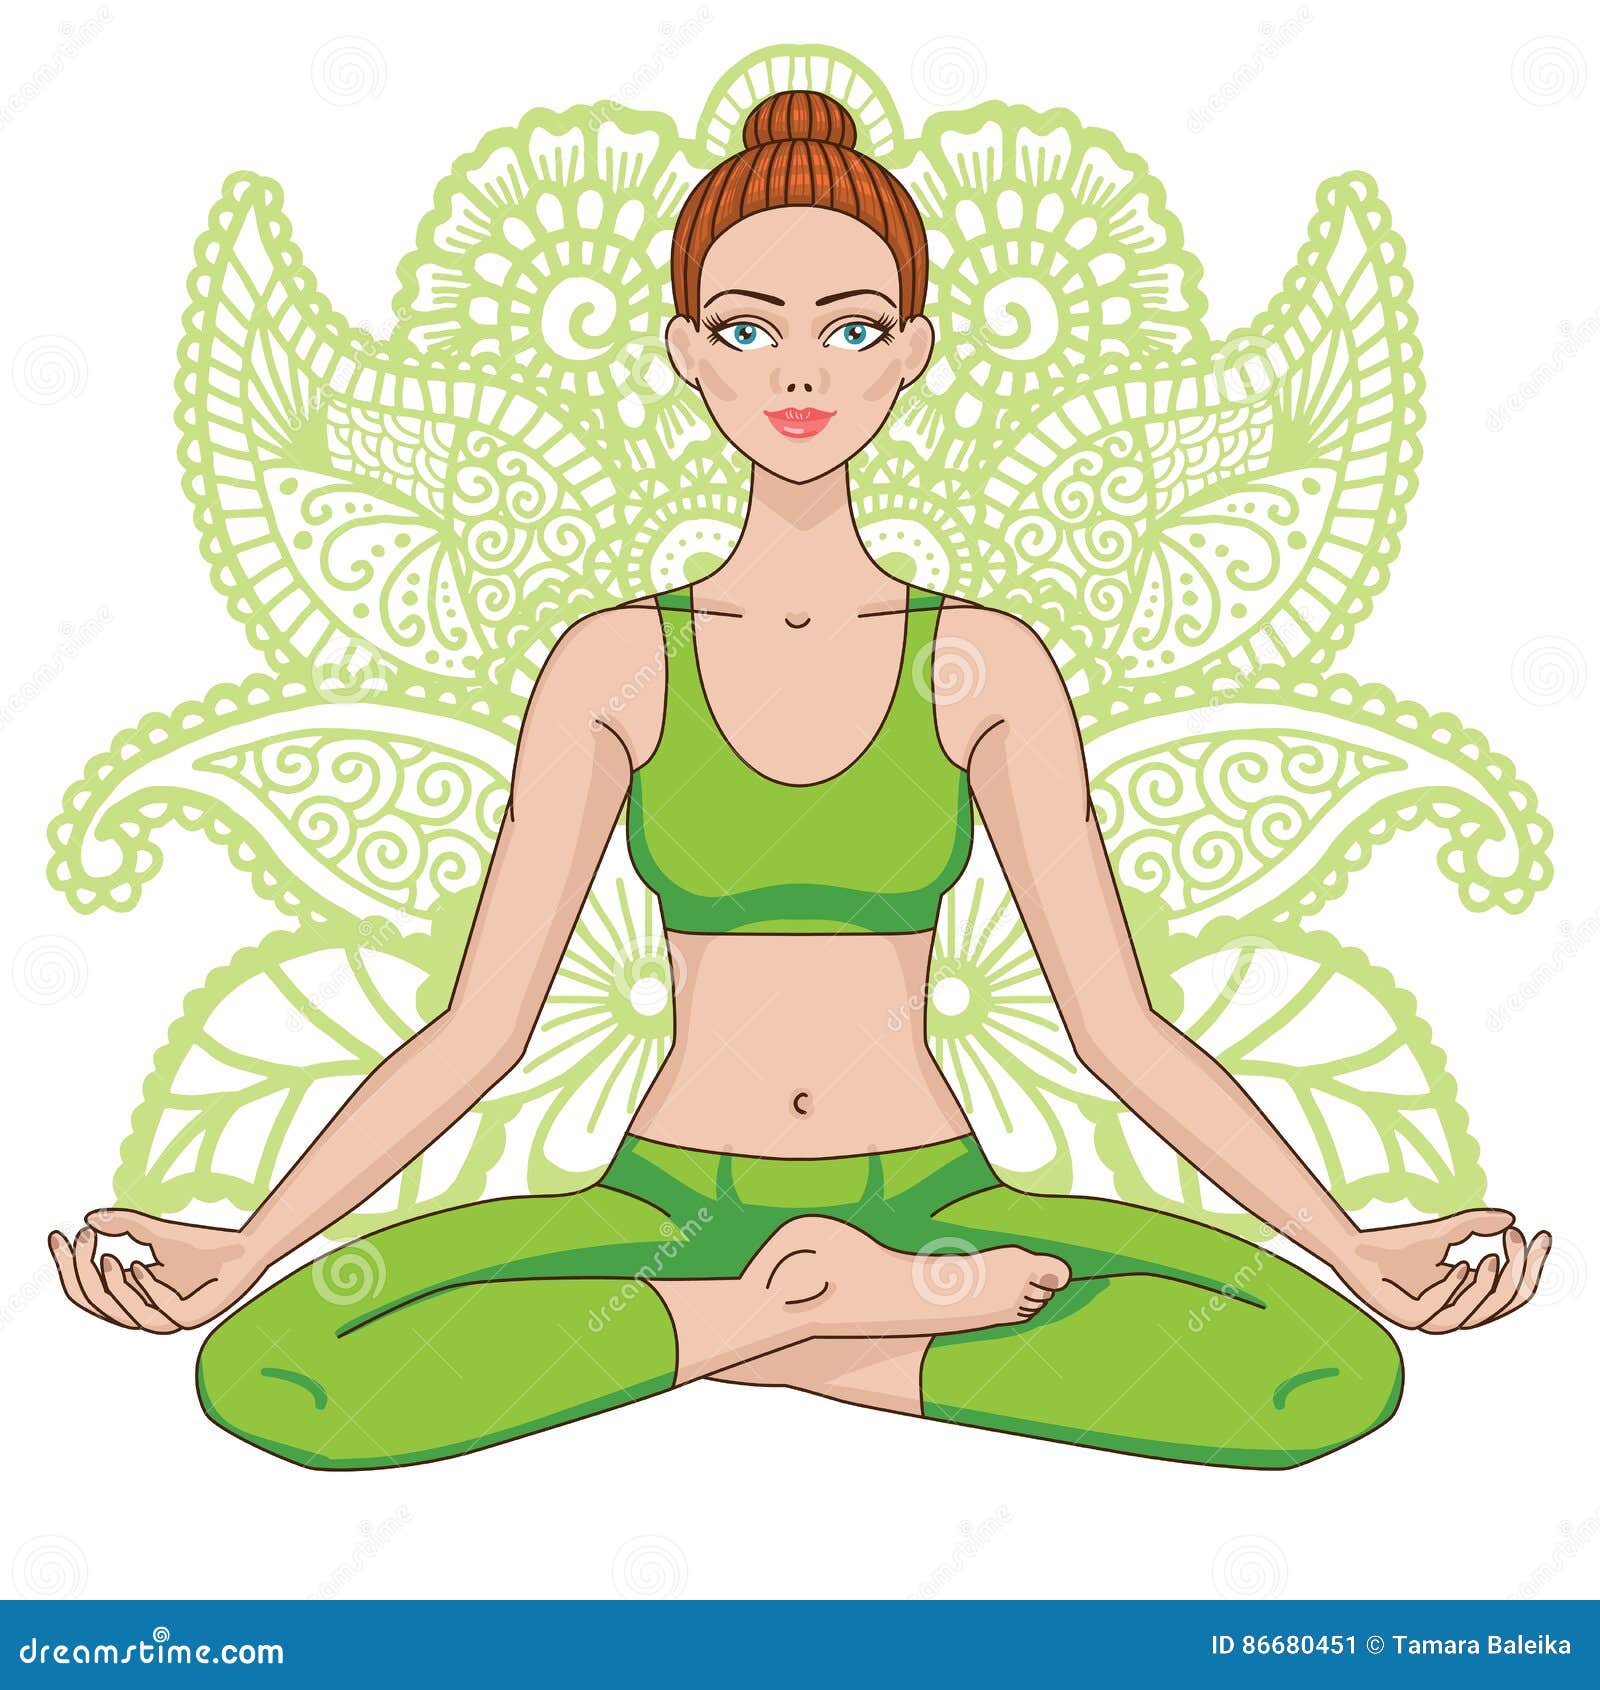 What is Padmasana | Yoga facts, Yoga poses, Yoga